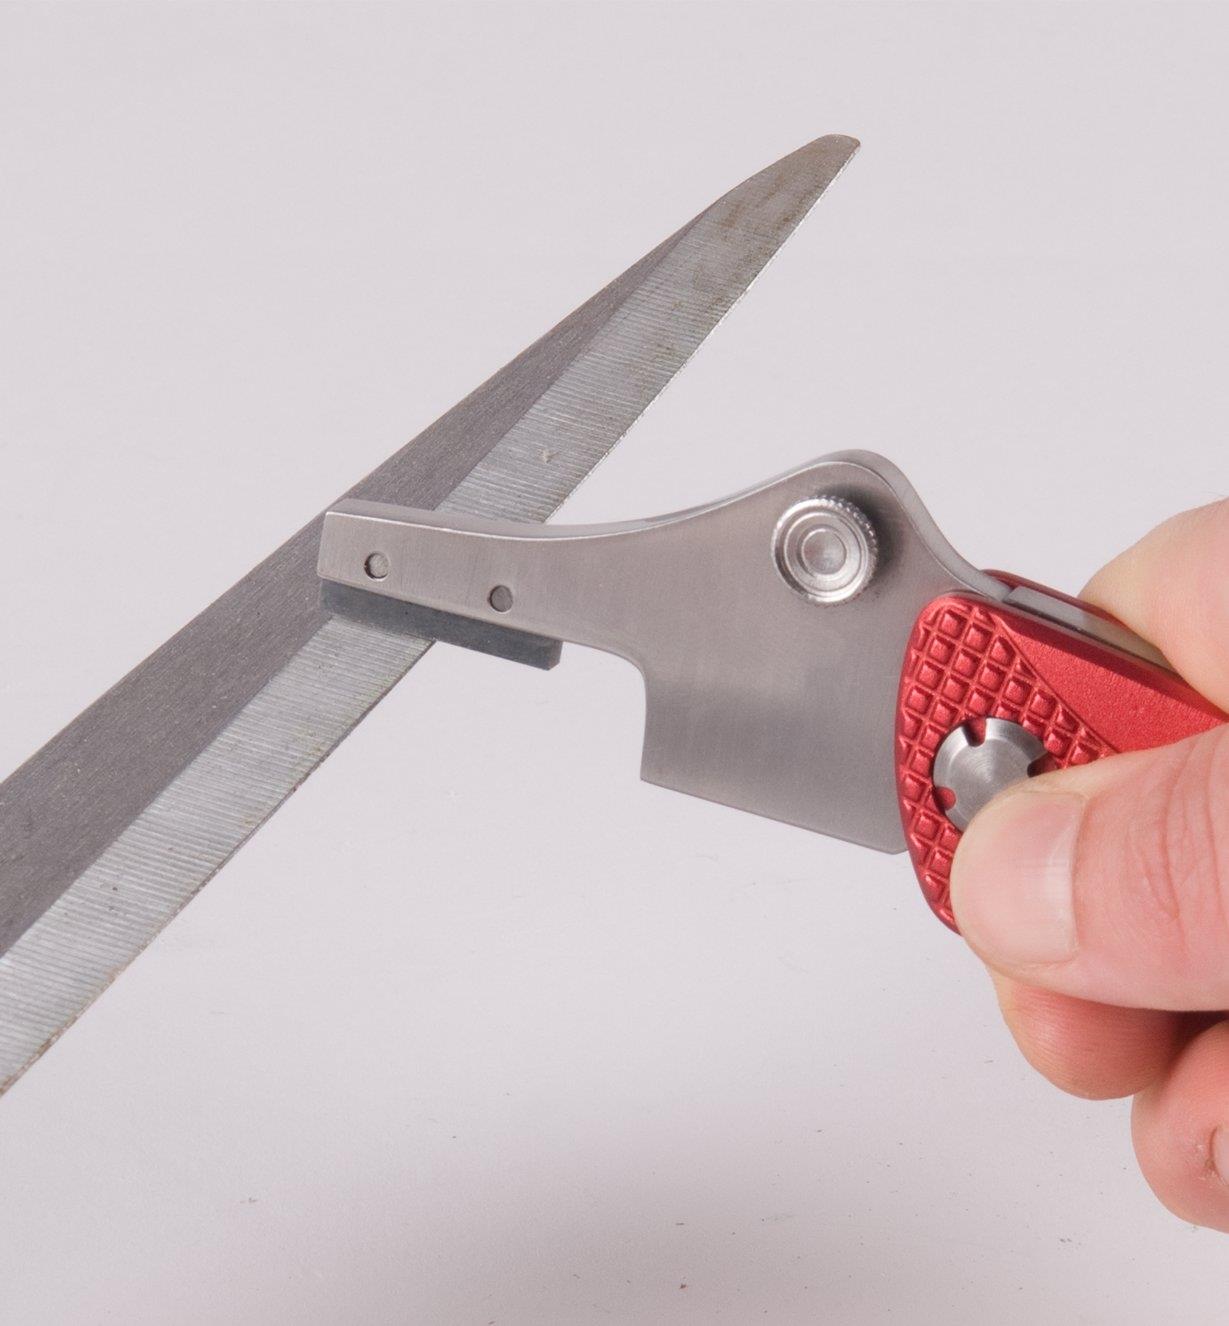 Universal Sharpener being used to sharpen scissors